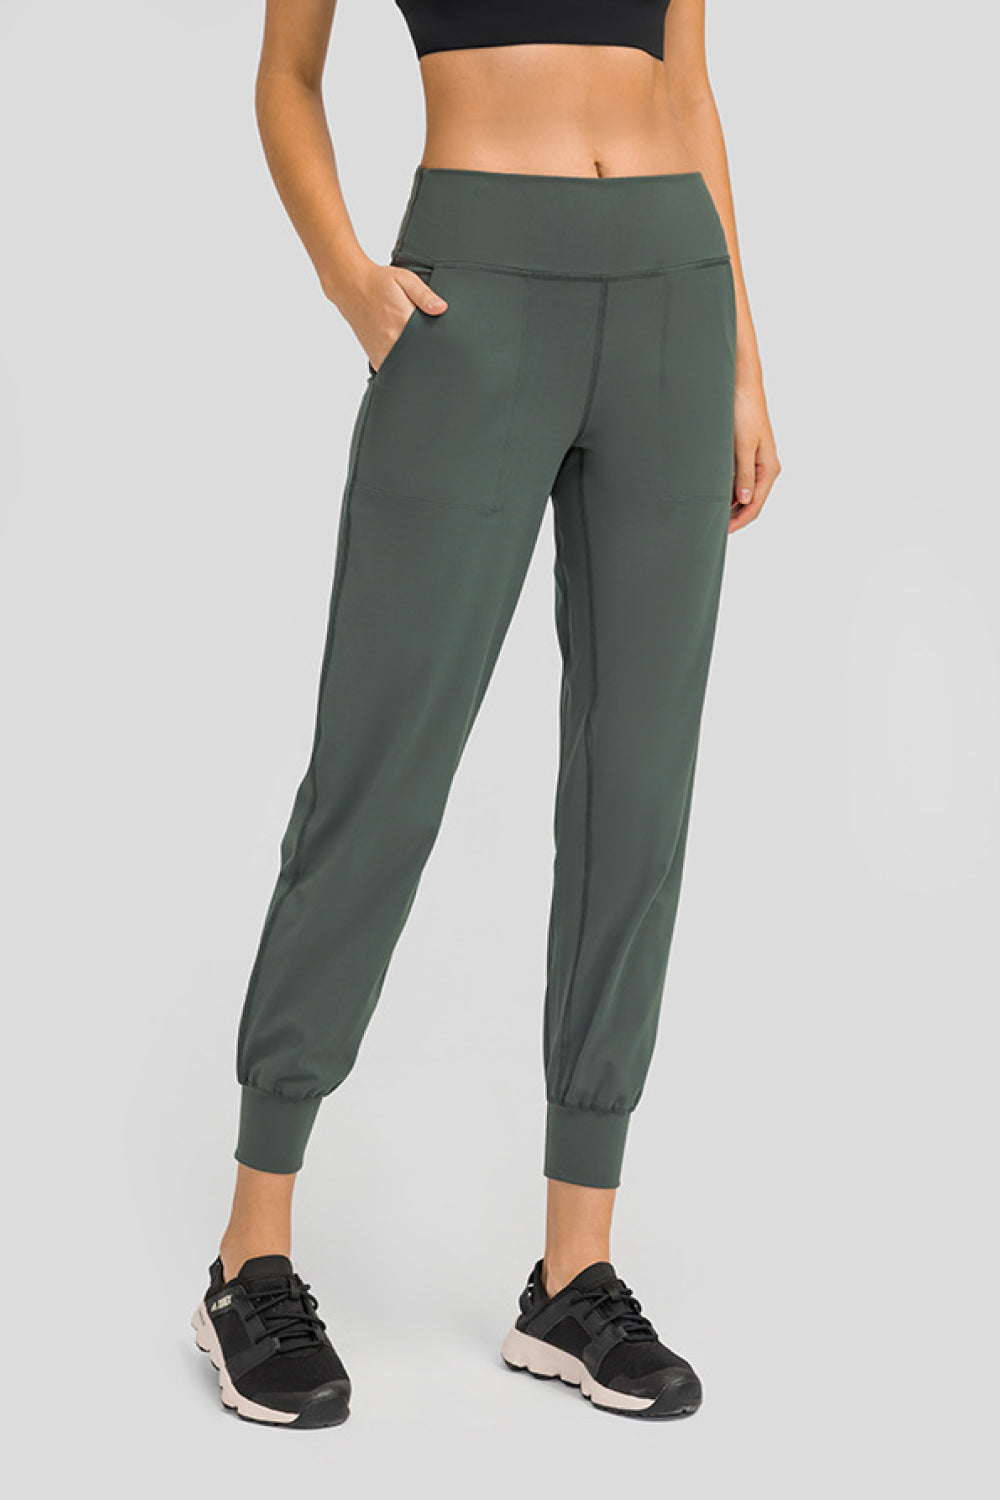 Wide Waistband Slant Pocket Pants Wide Waistband Slant Pocket Pants - M&R CORNERActivewear M&R CORNER Green / 4